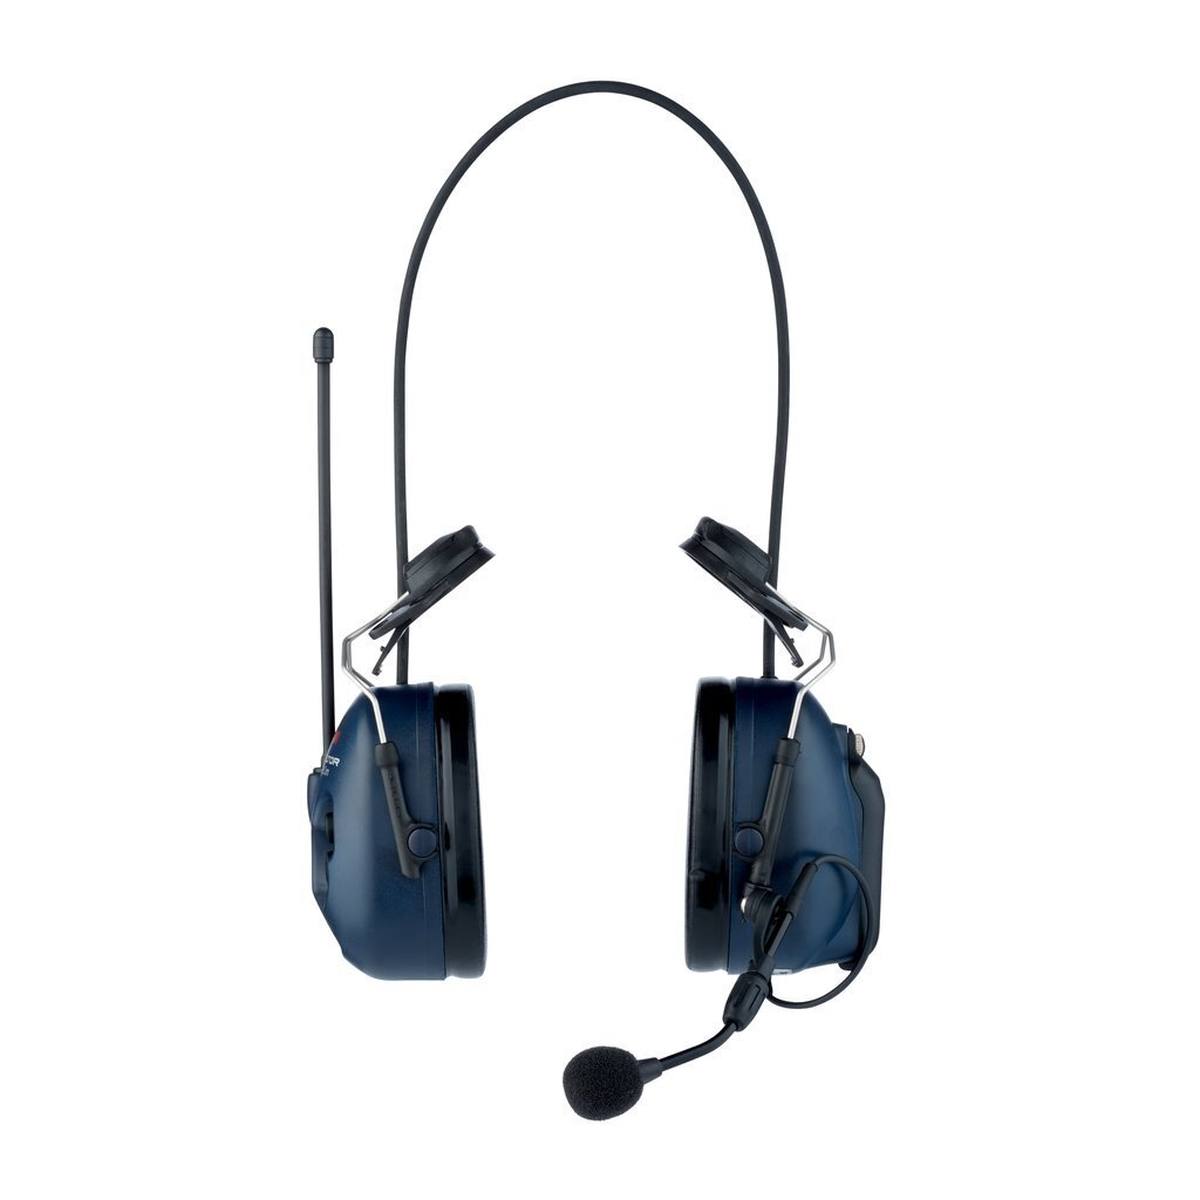 3M LiteCom with helmet attachment, built-in PMR 446 radio, incl. boom microphone, SNR = 33 dB, blue